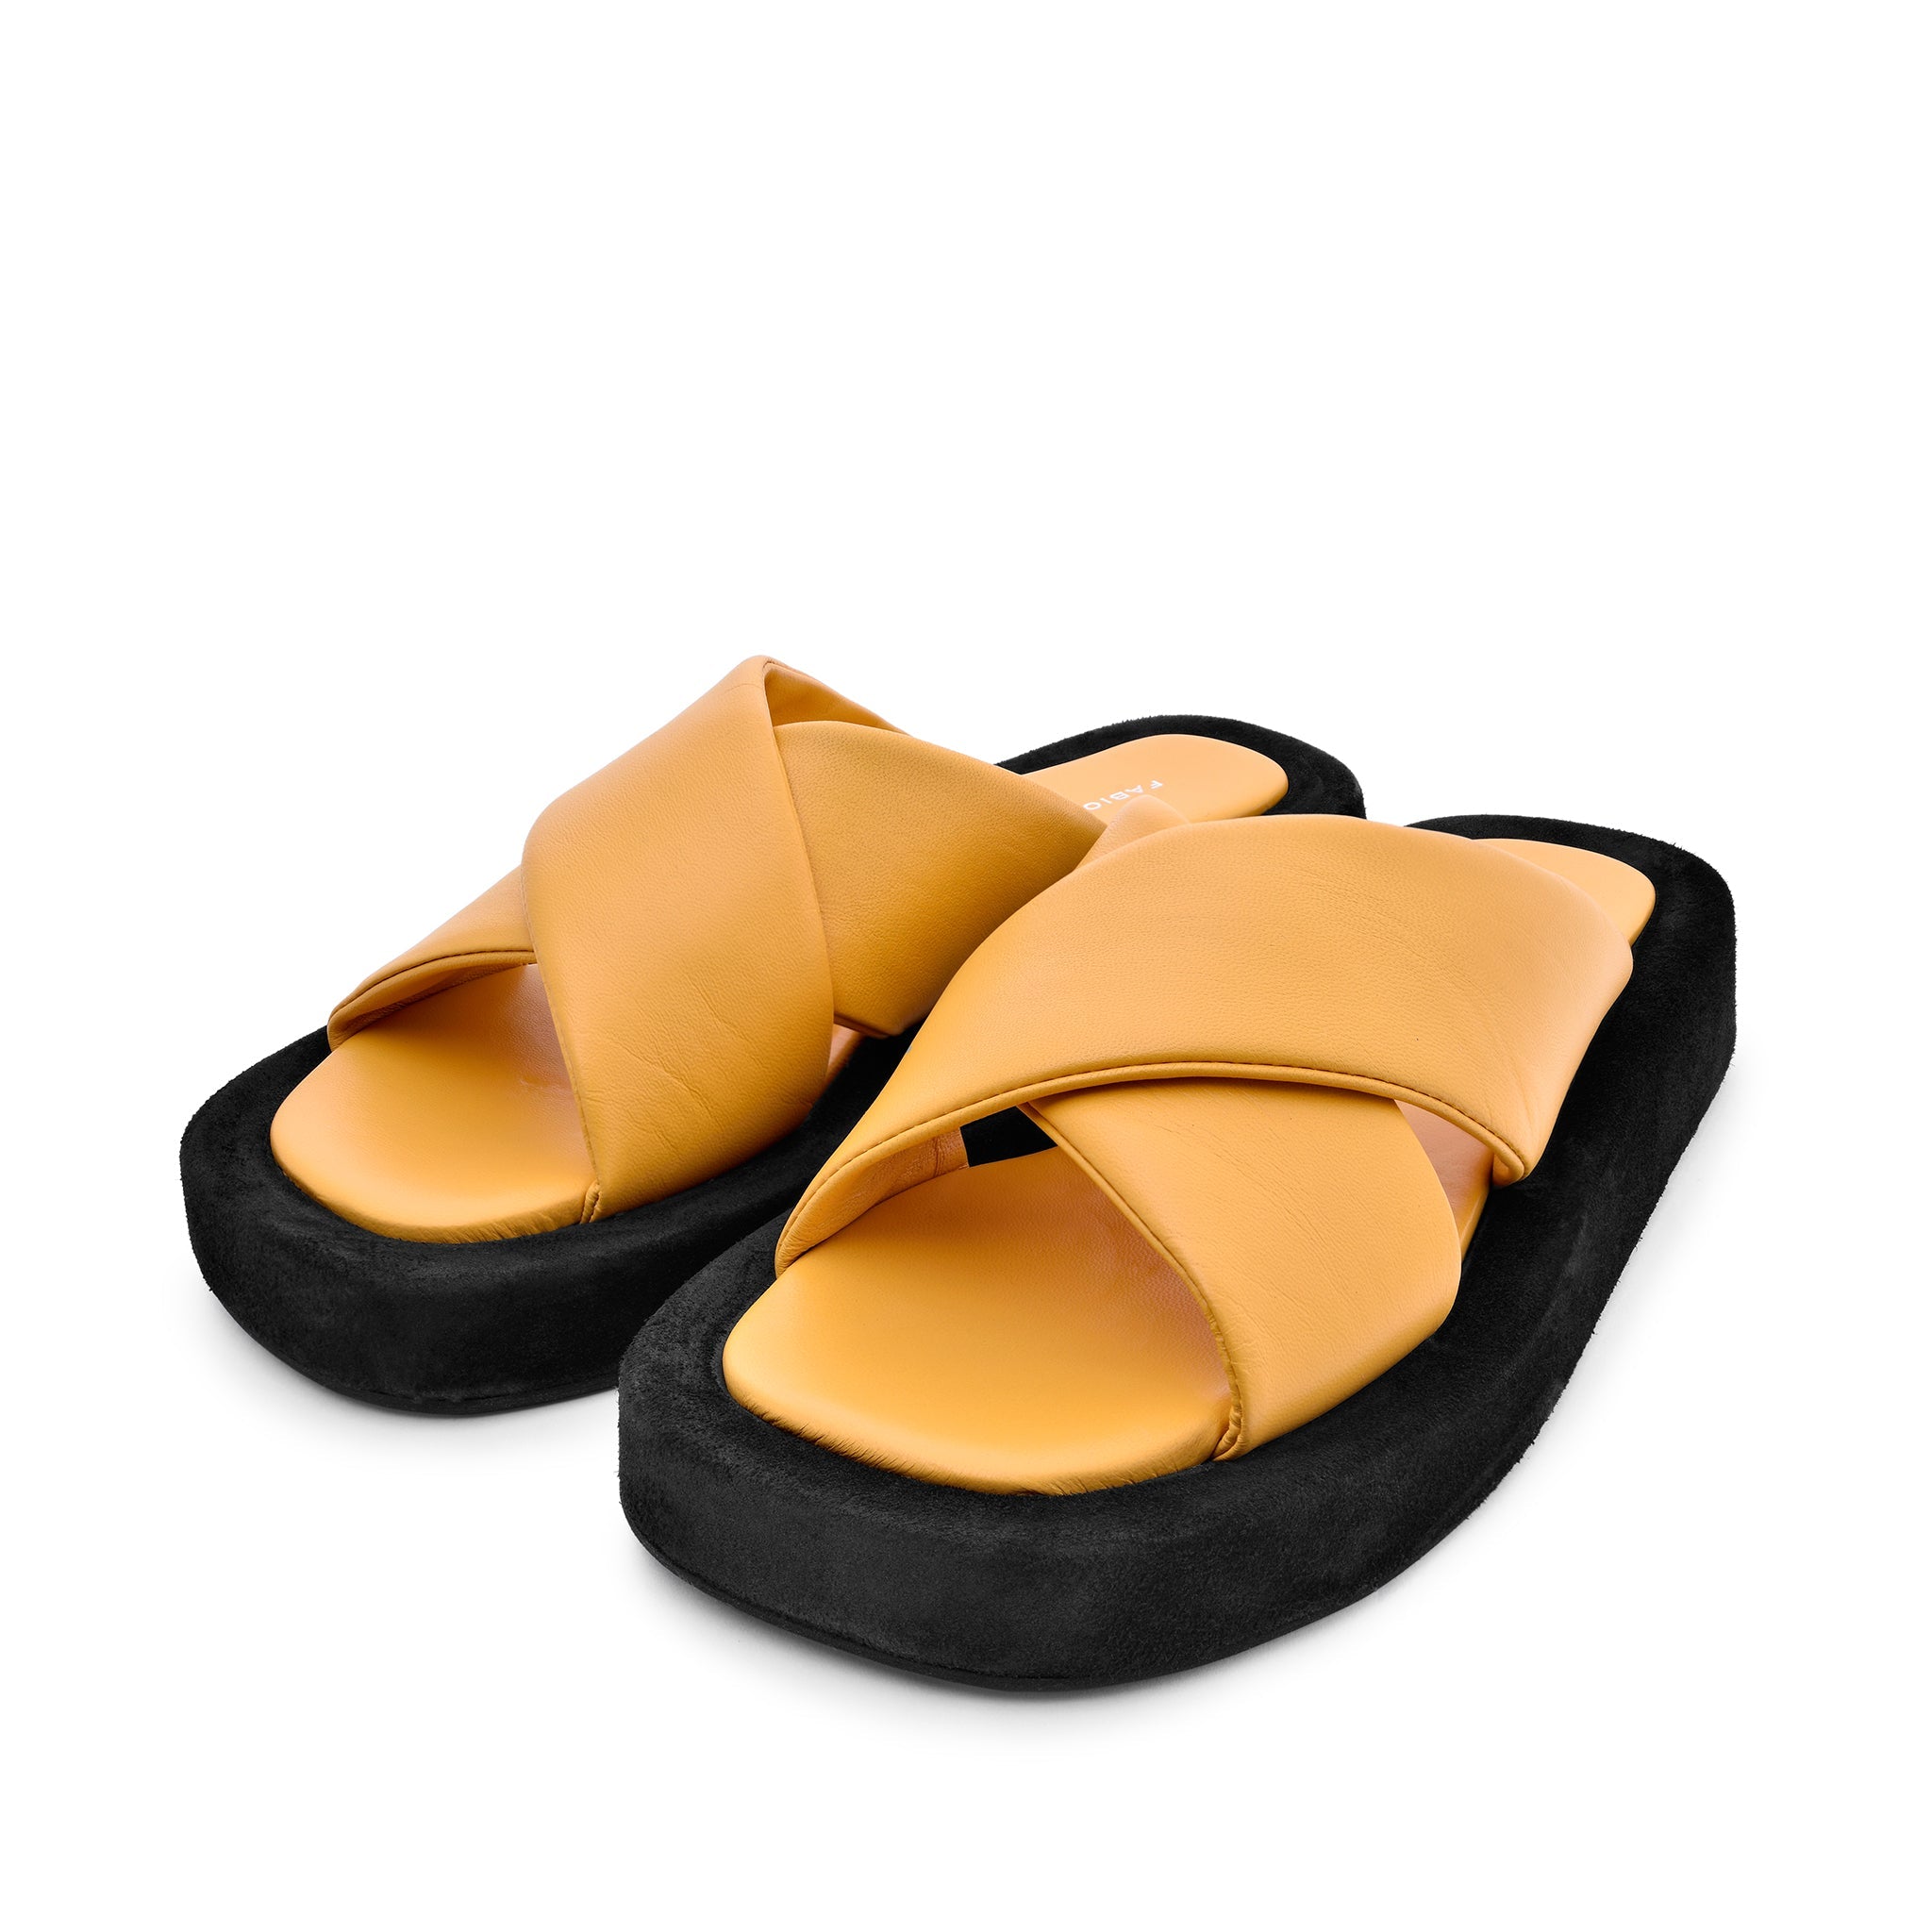 Luna Sun Yellow Leather Flat Sandals LUNA5056 - 7